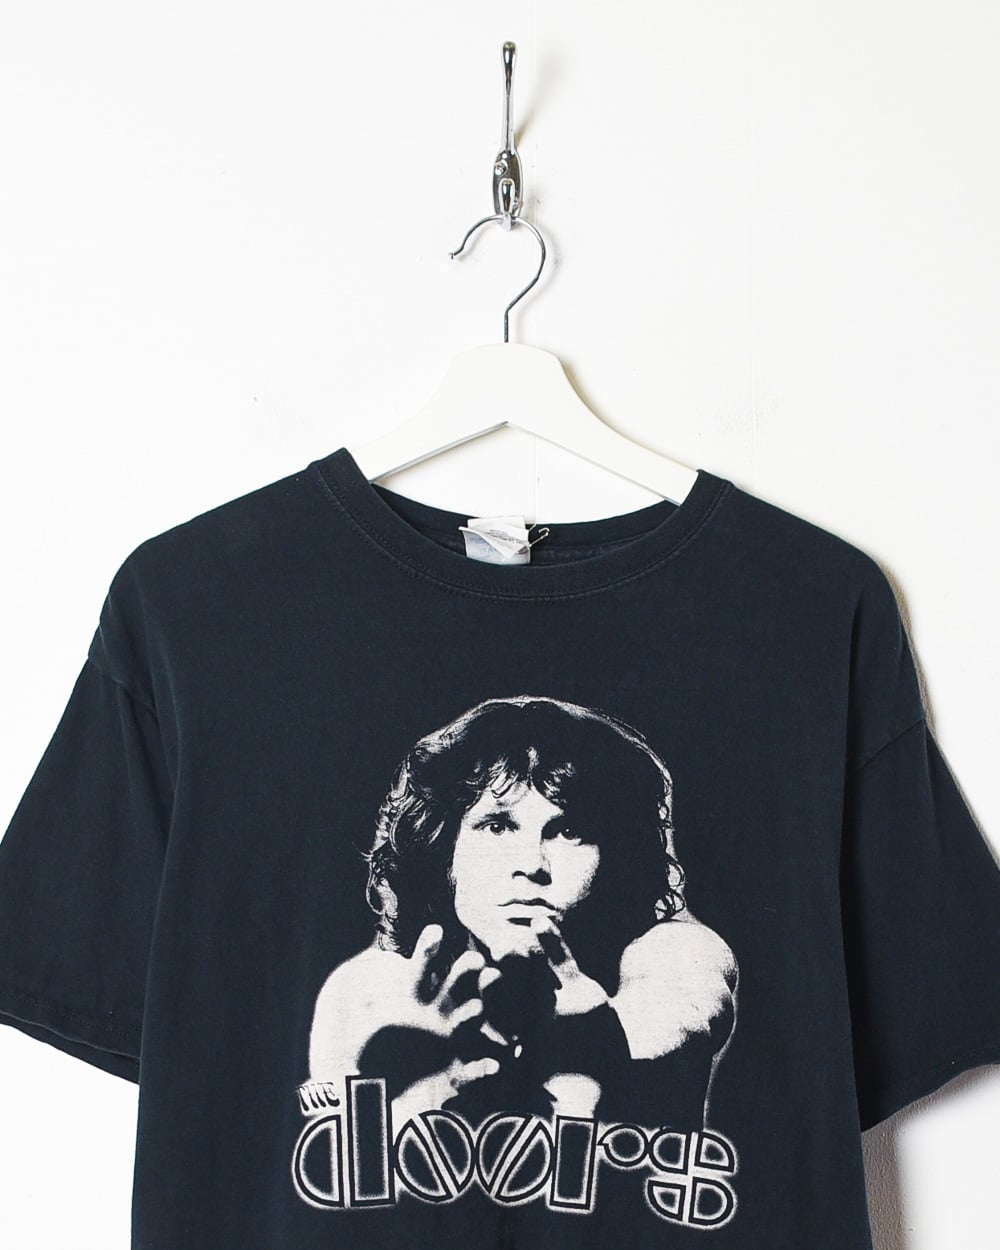 Black The Doors Graphic T-Shirt - Medium